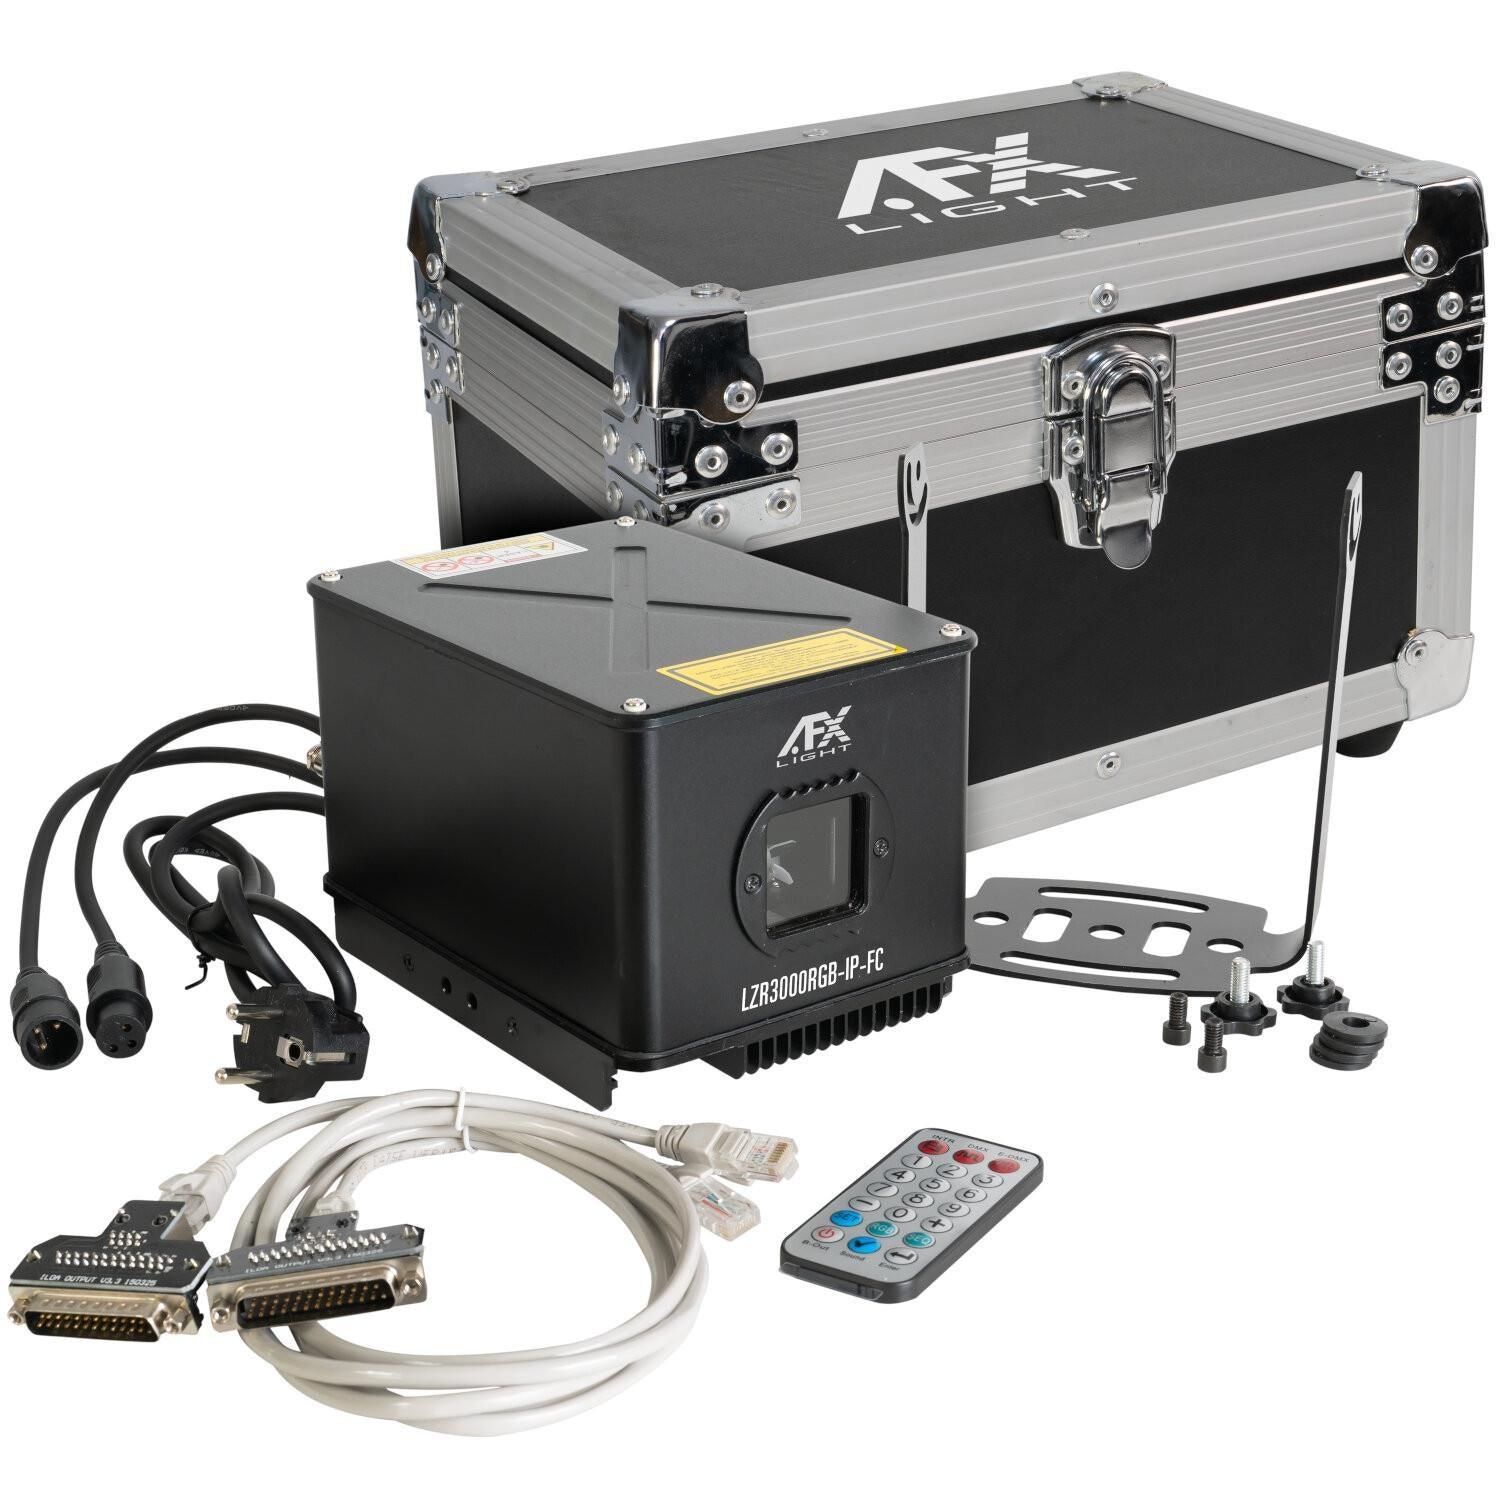 AFX LZR3000RGB-IP-FC IP65 3w RGB ILDA/DMX Laser with Flight Case - DY Pro Audio